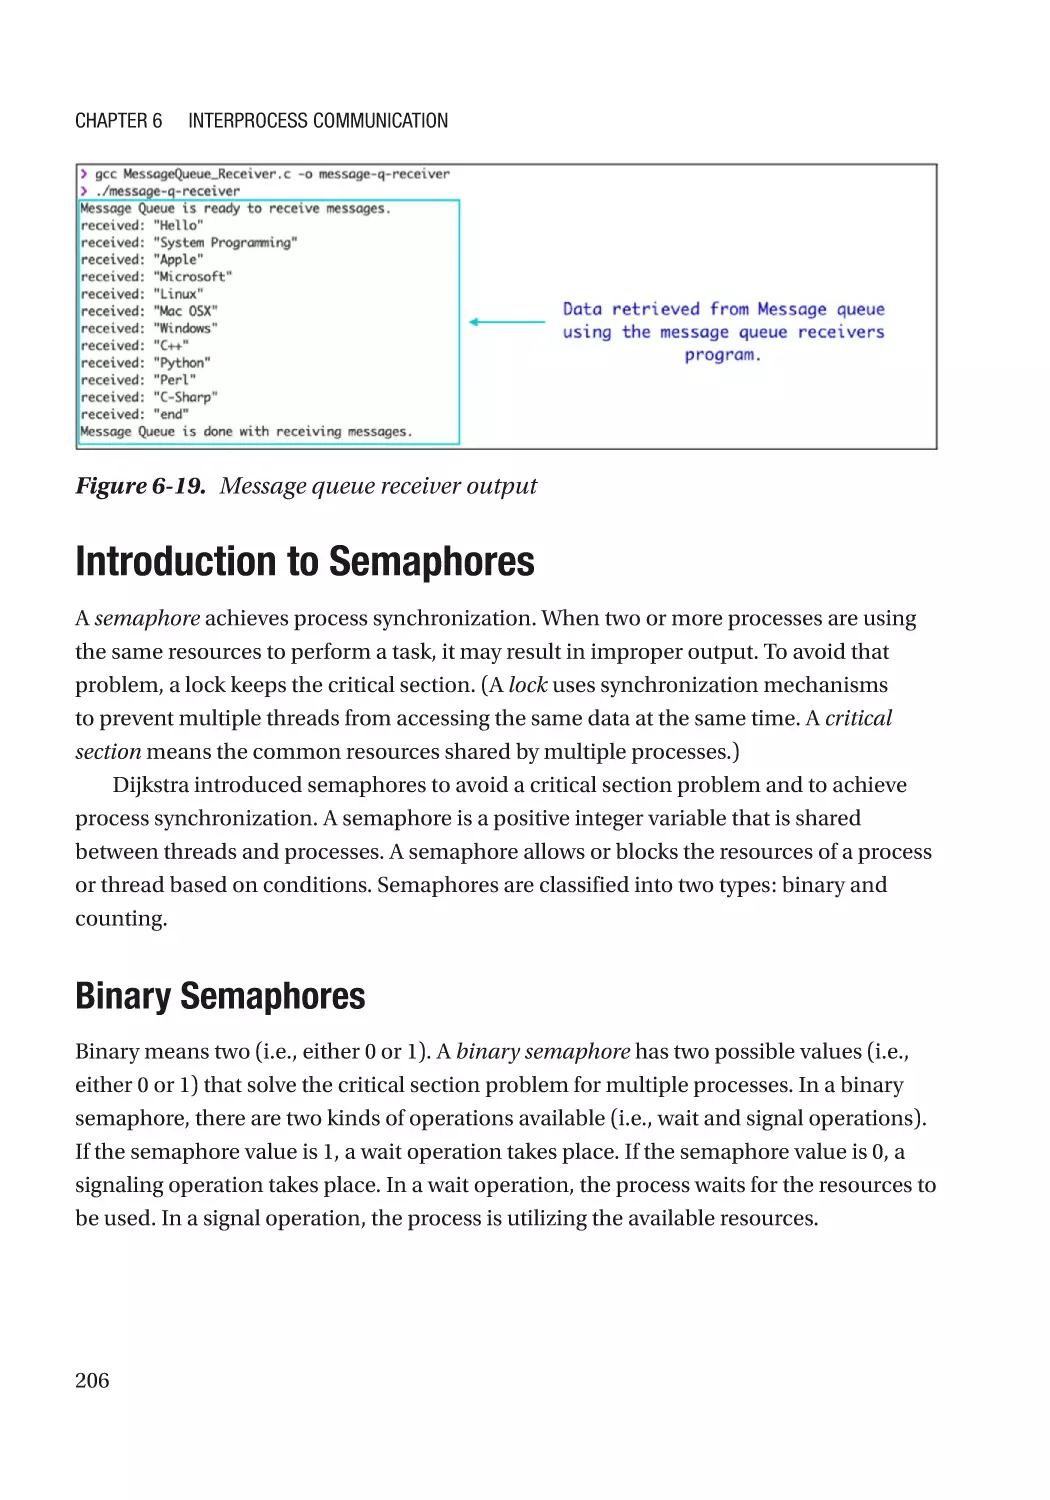 Introduction to Semaphores
Binary Semaphores